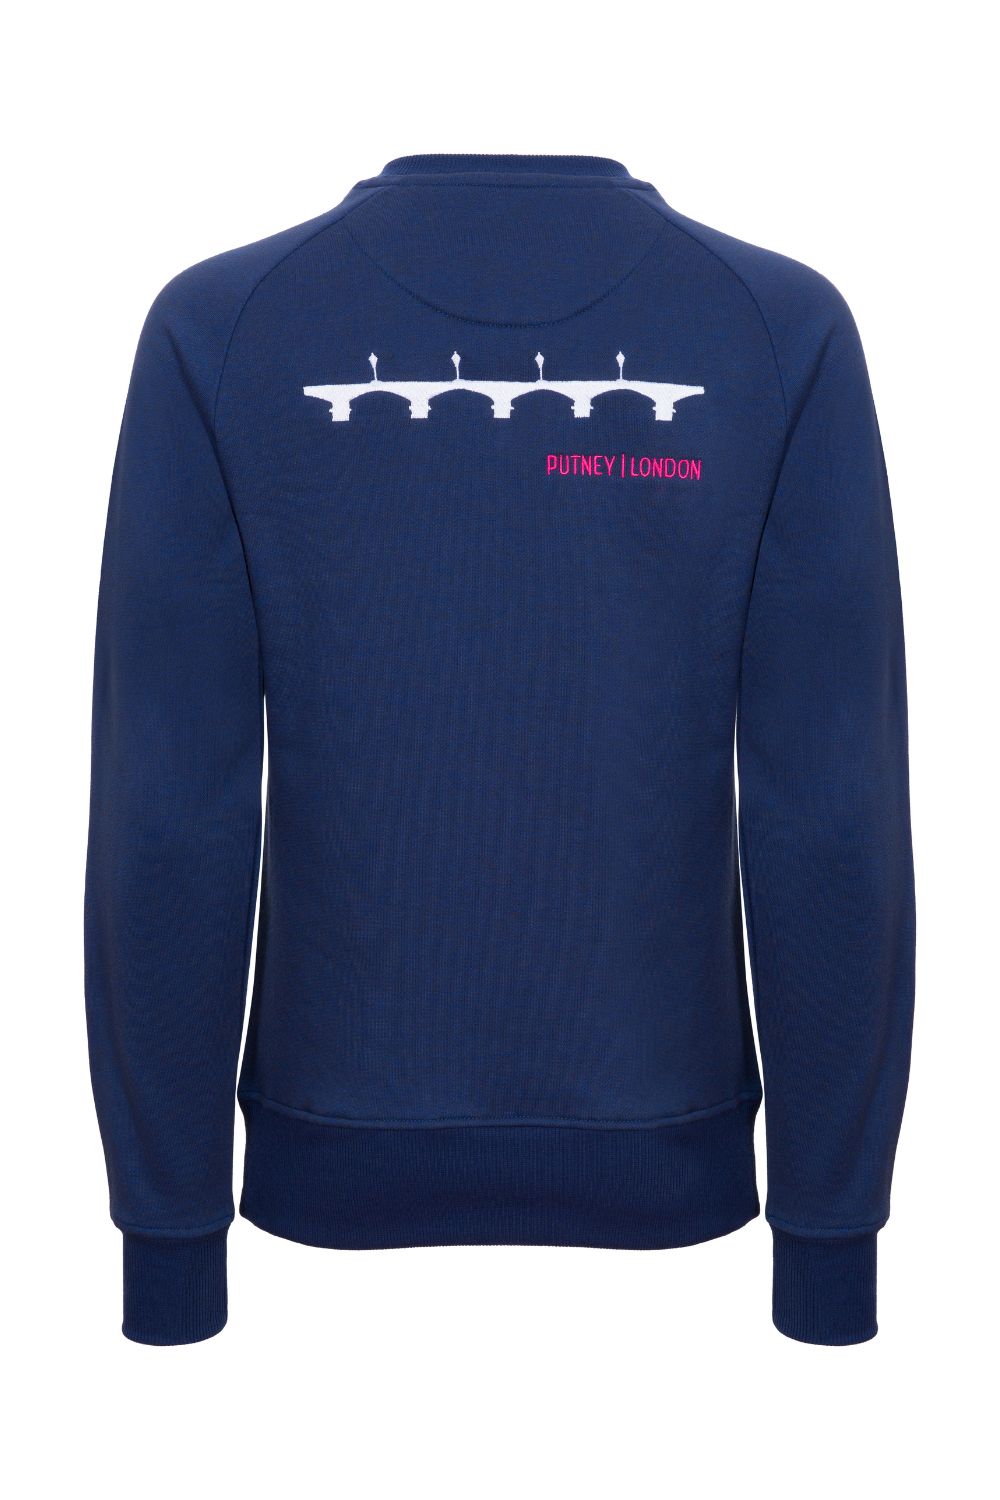 The Putney Sweatshirt (Unisex)